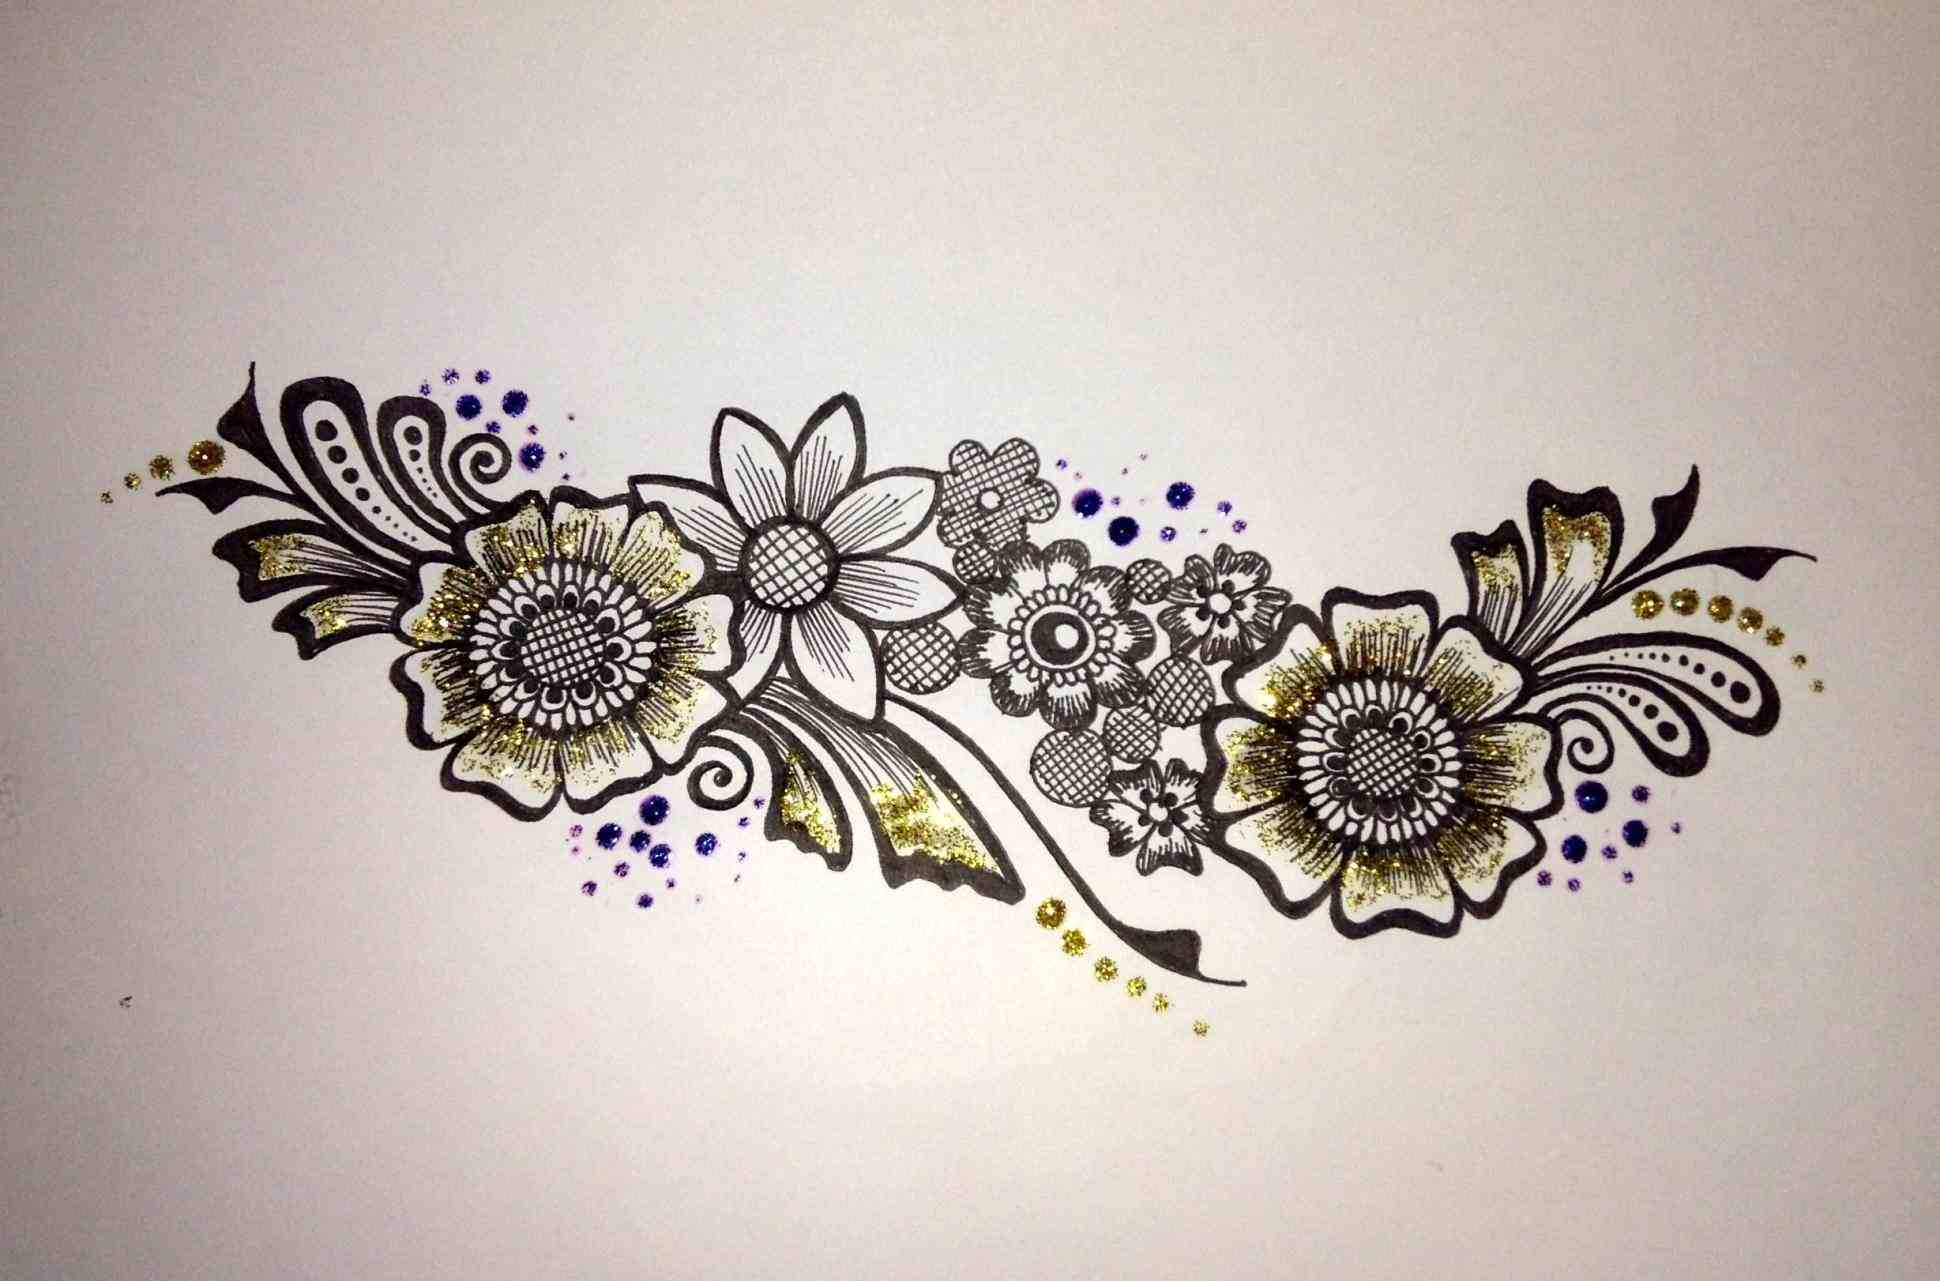  beautiful flower design drawing